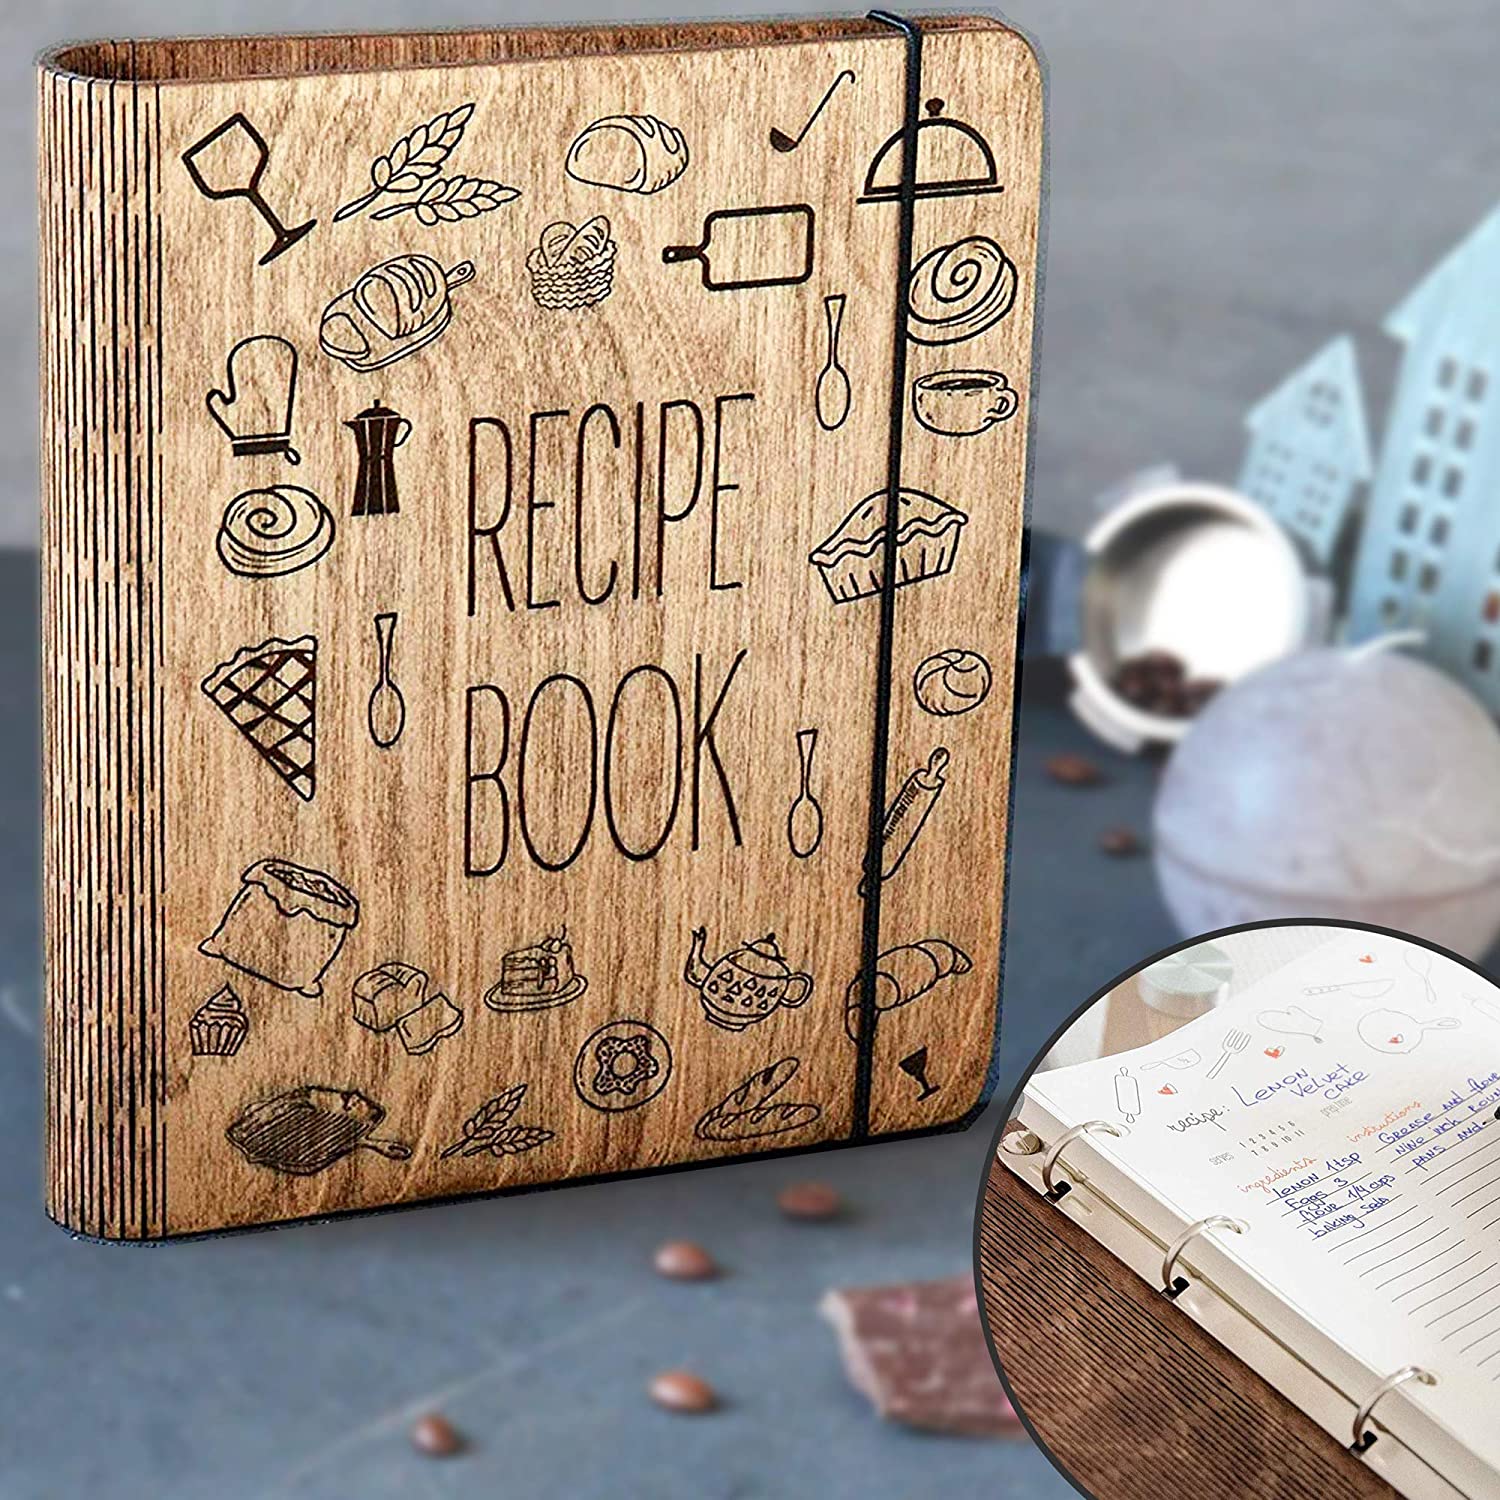 Enjoy The Wood recipe book